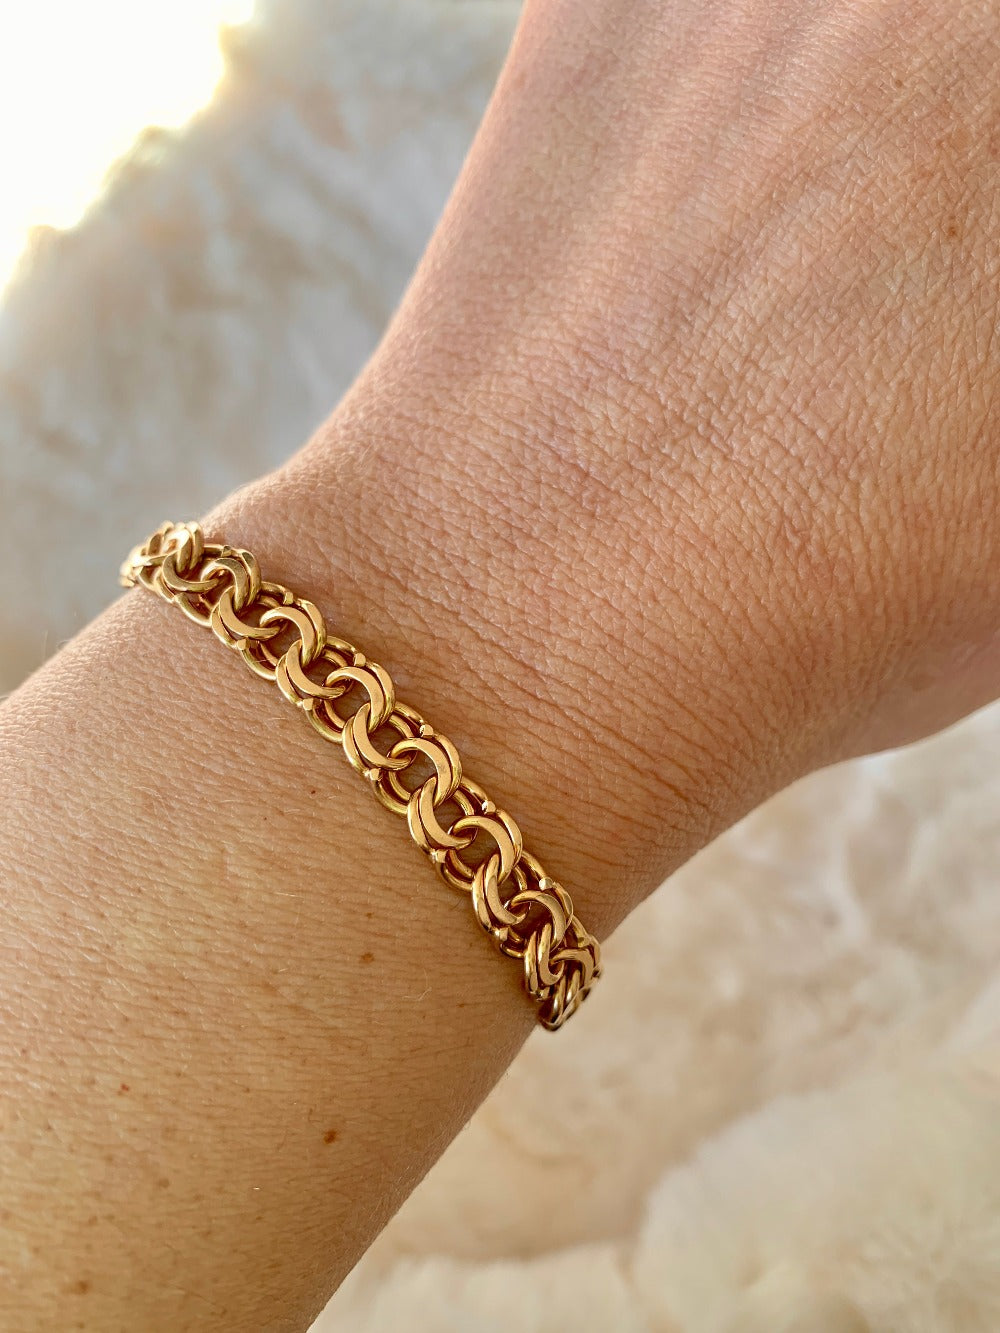 Italian Gold Twisted Chain Link Bracelet in 18K Gold - 7.25